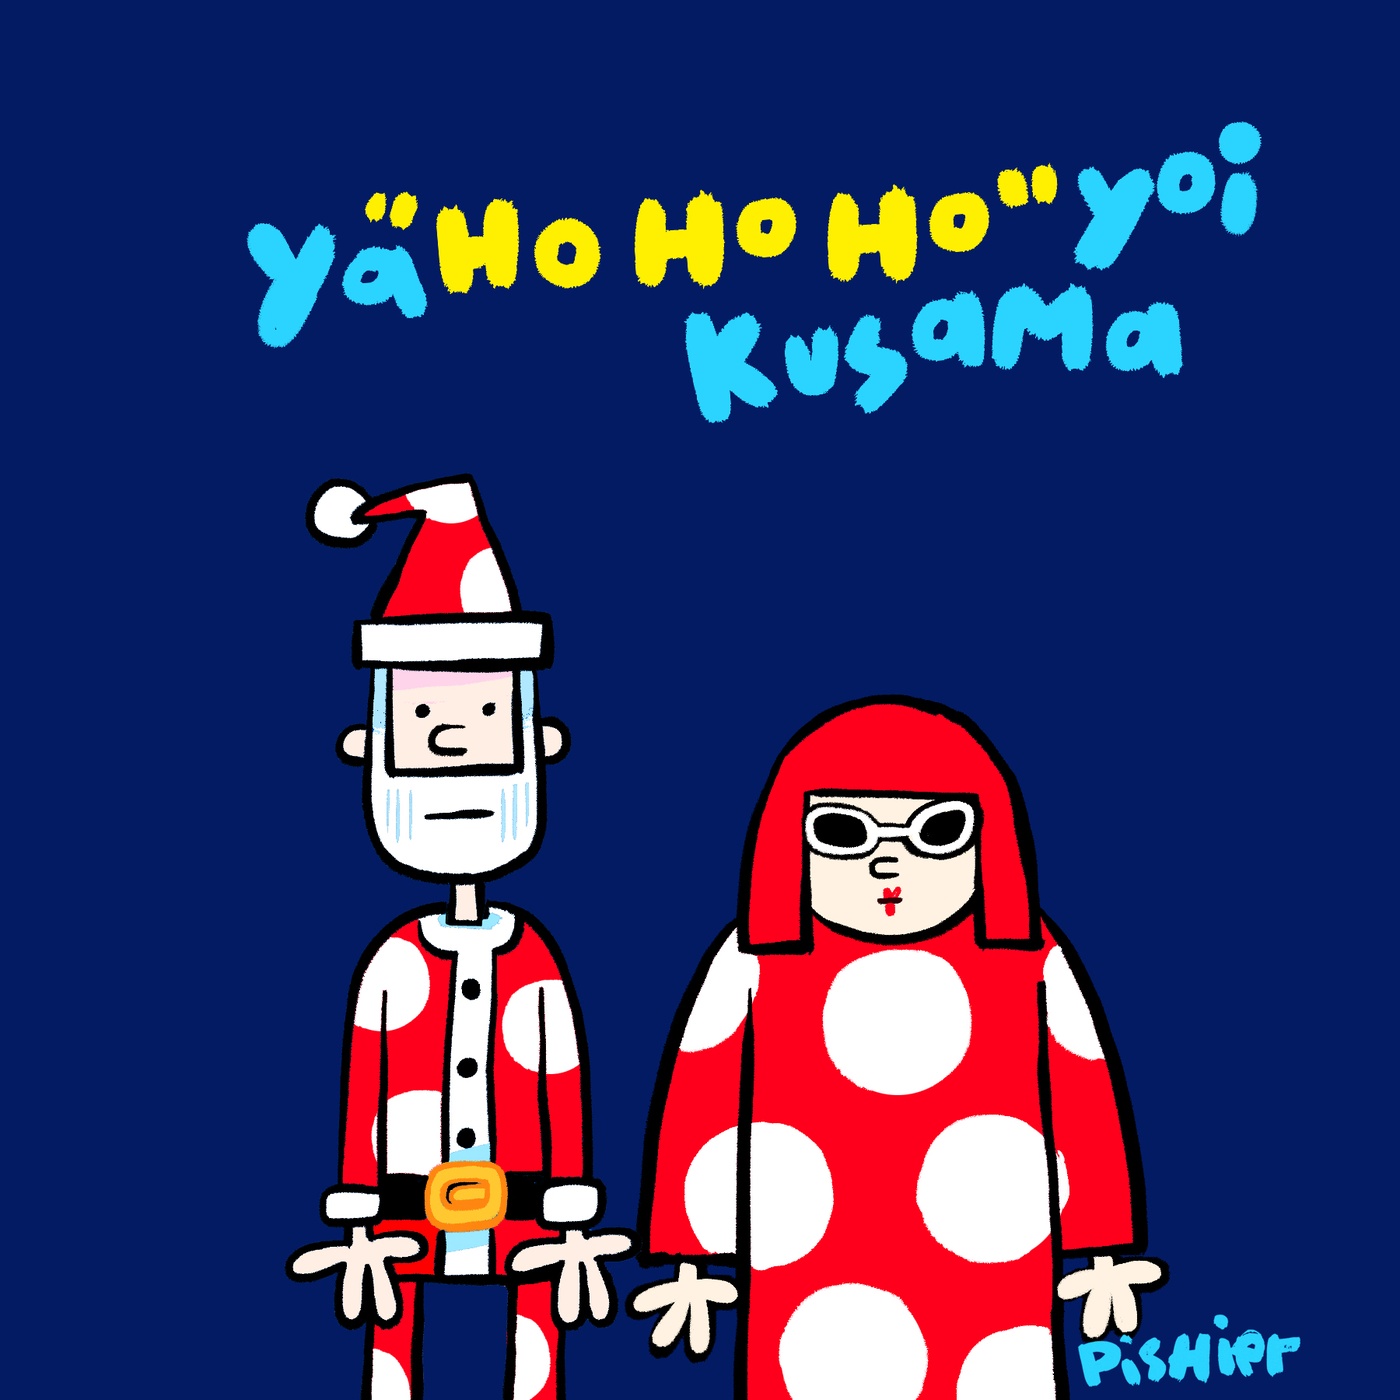 PisHier - Ya "ho ho ho" yoi kusama